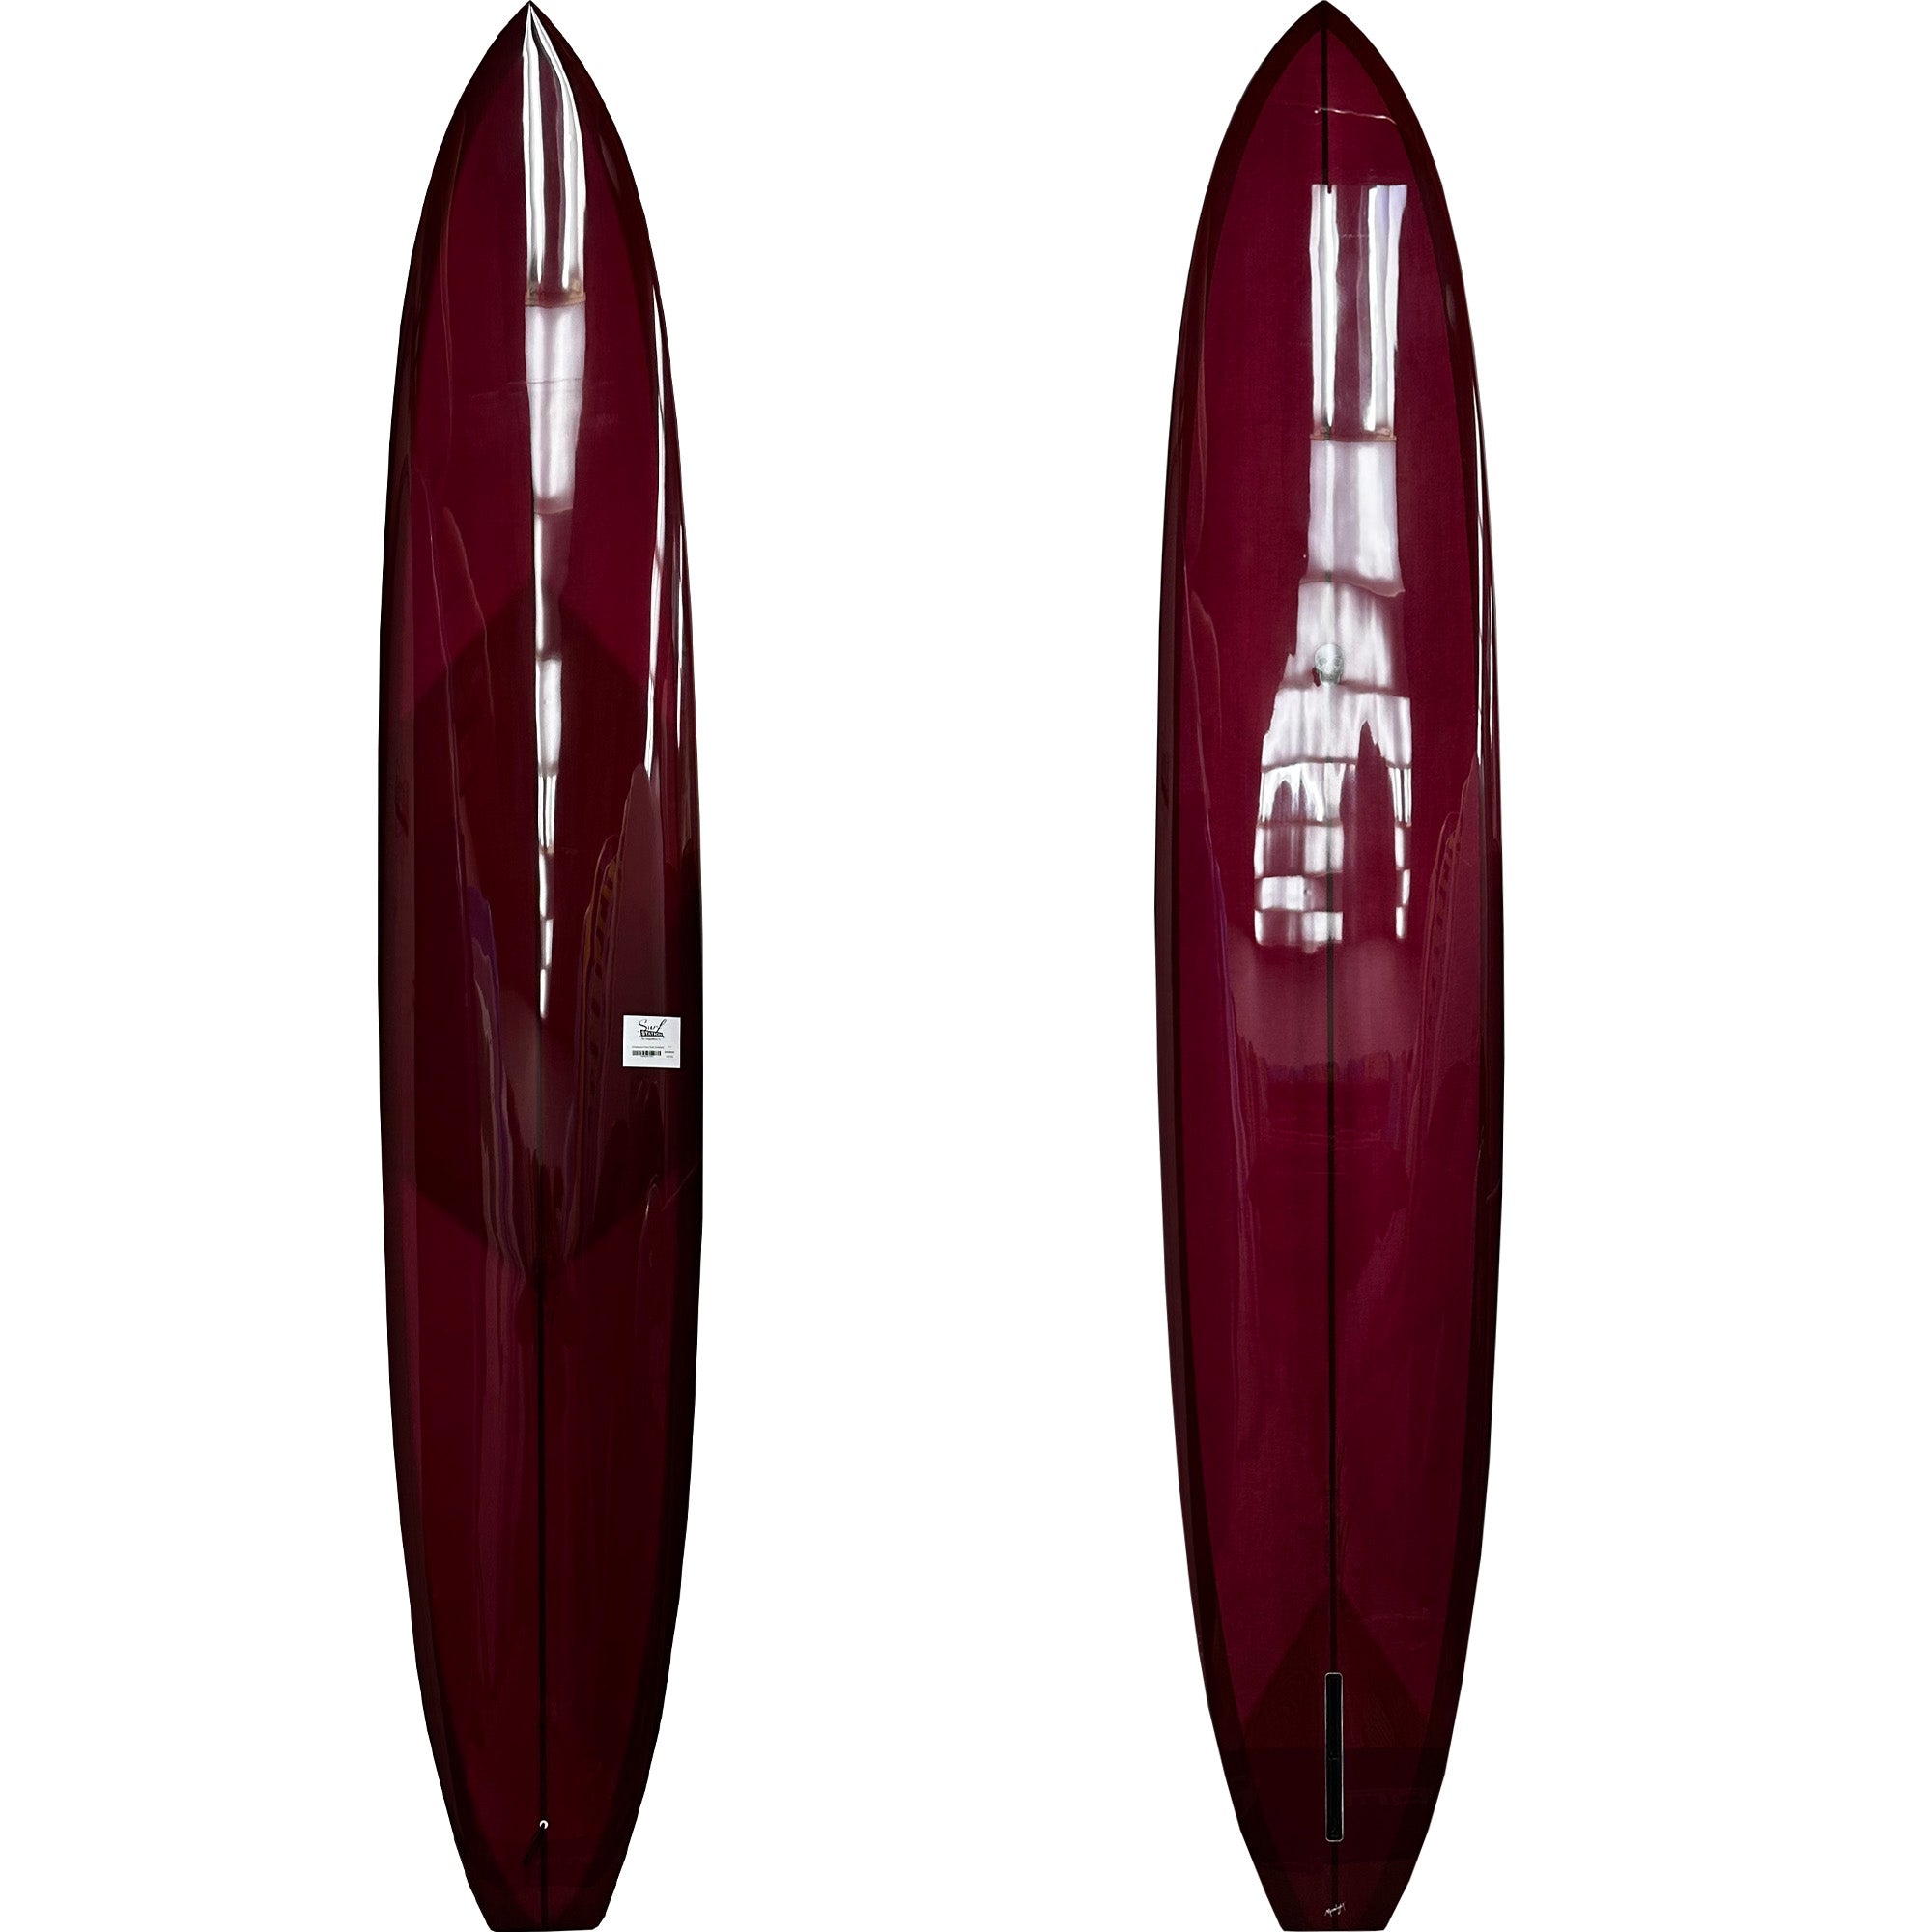 Christenson Chris Craft 11'0" Surfboard